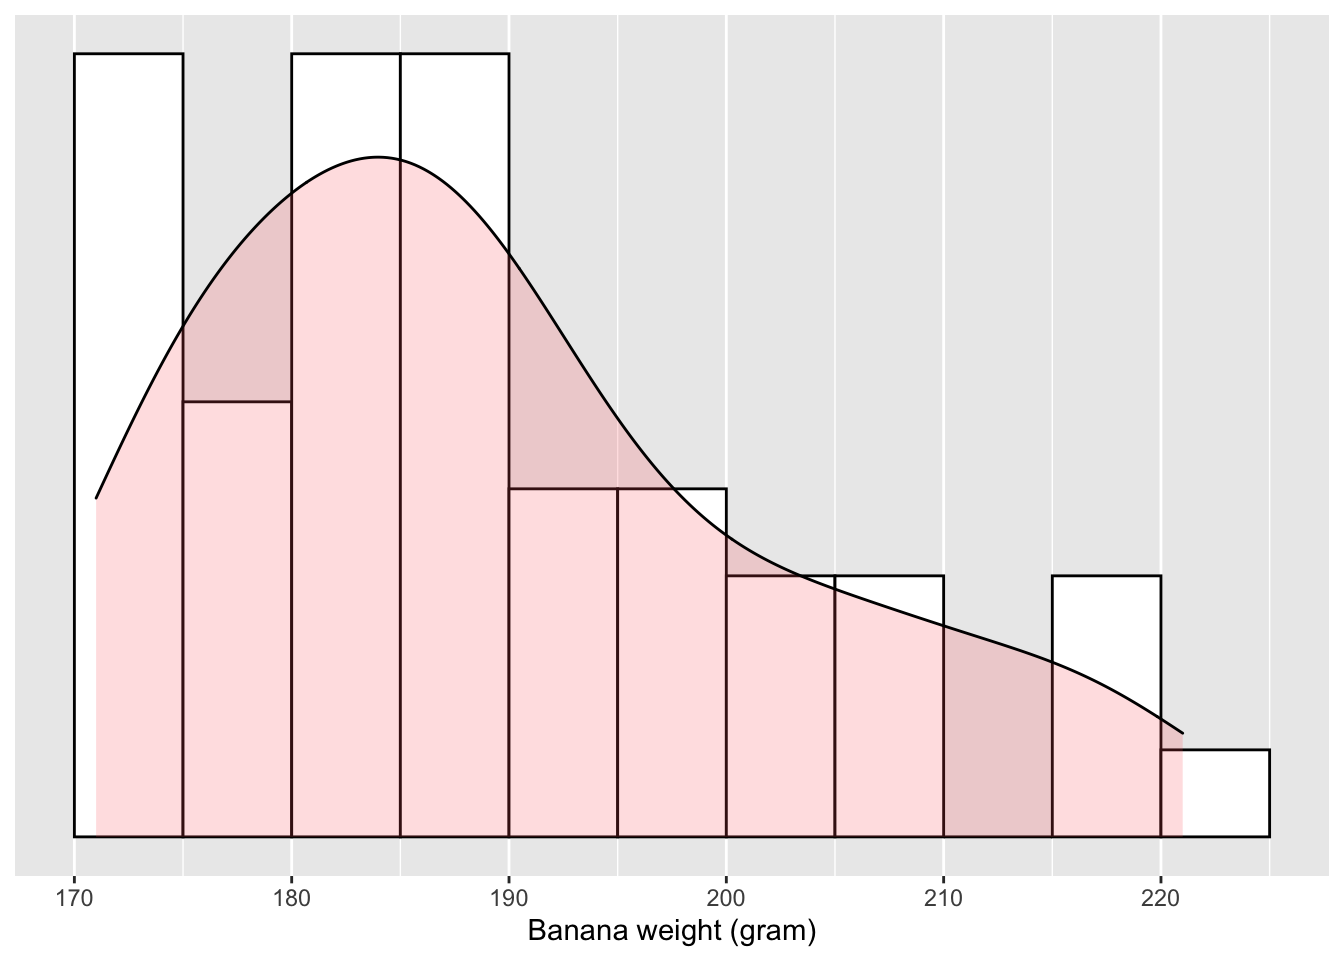 Distribution of 50 bananas' weight